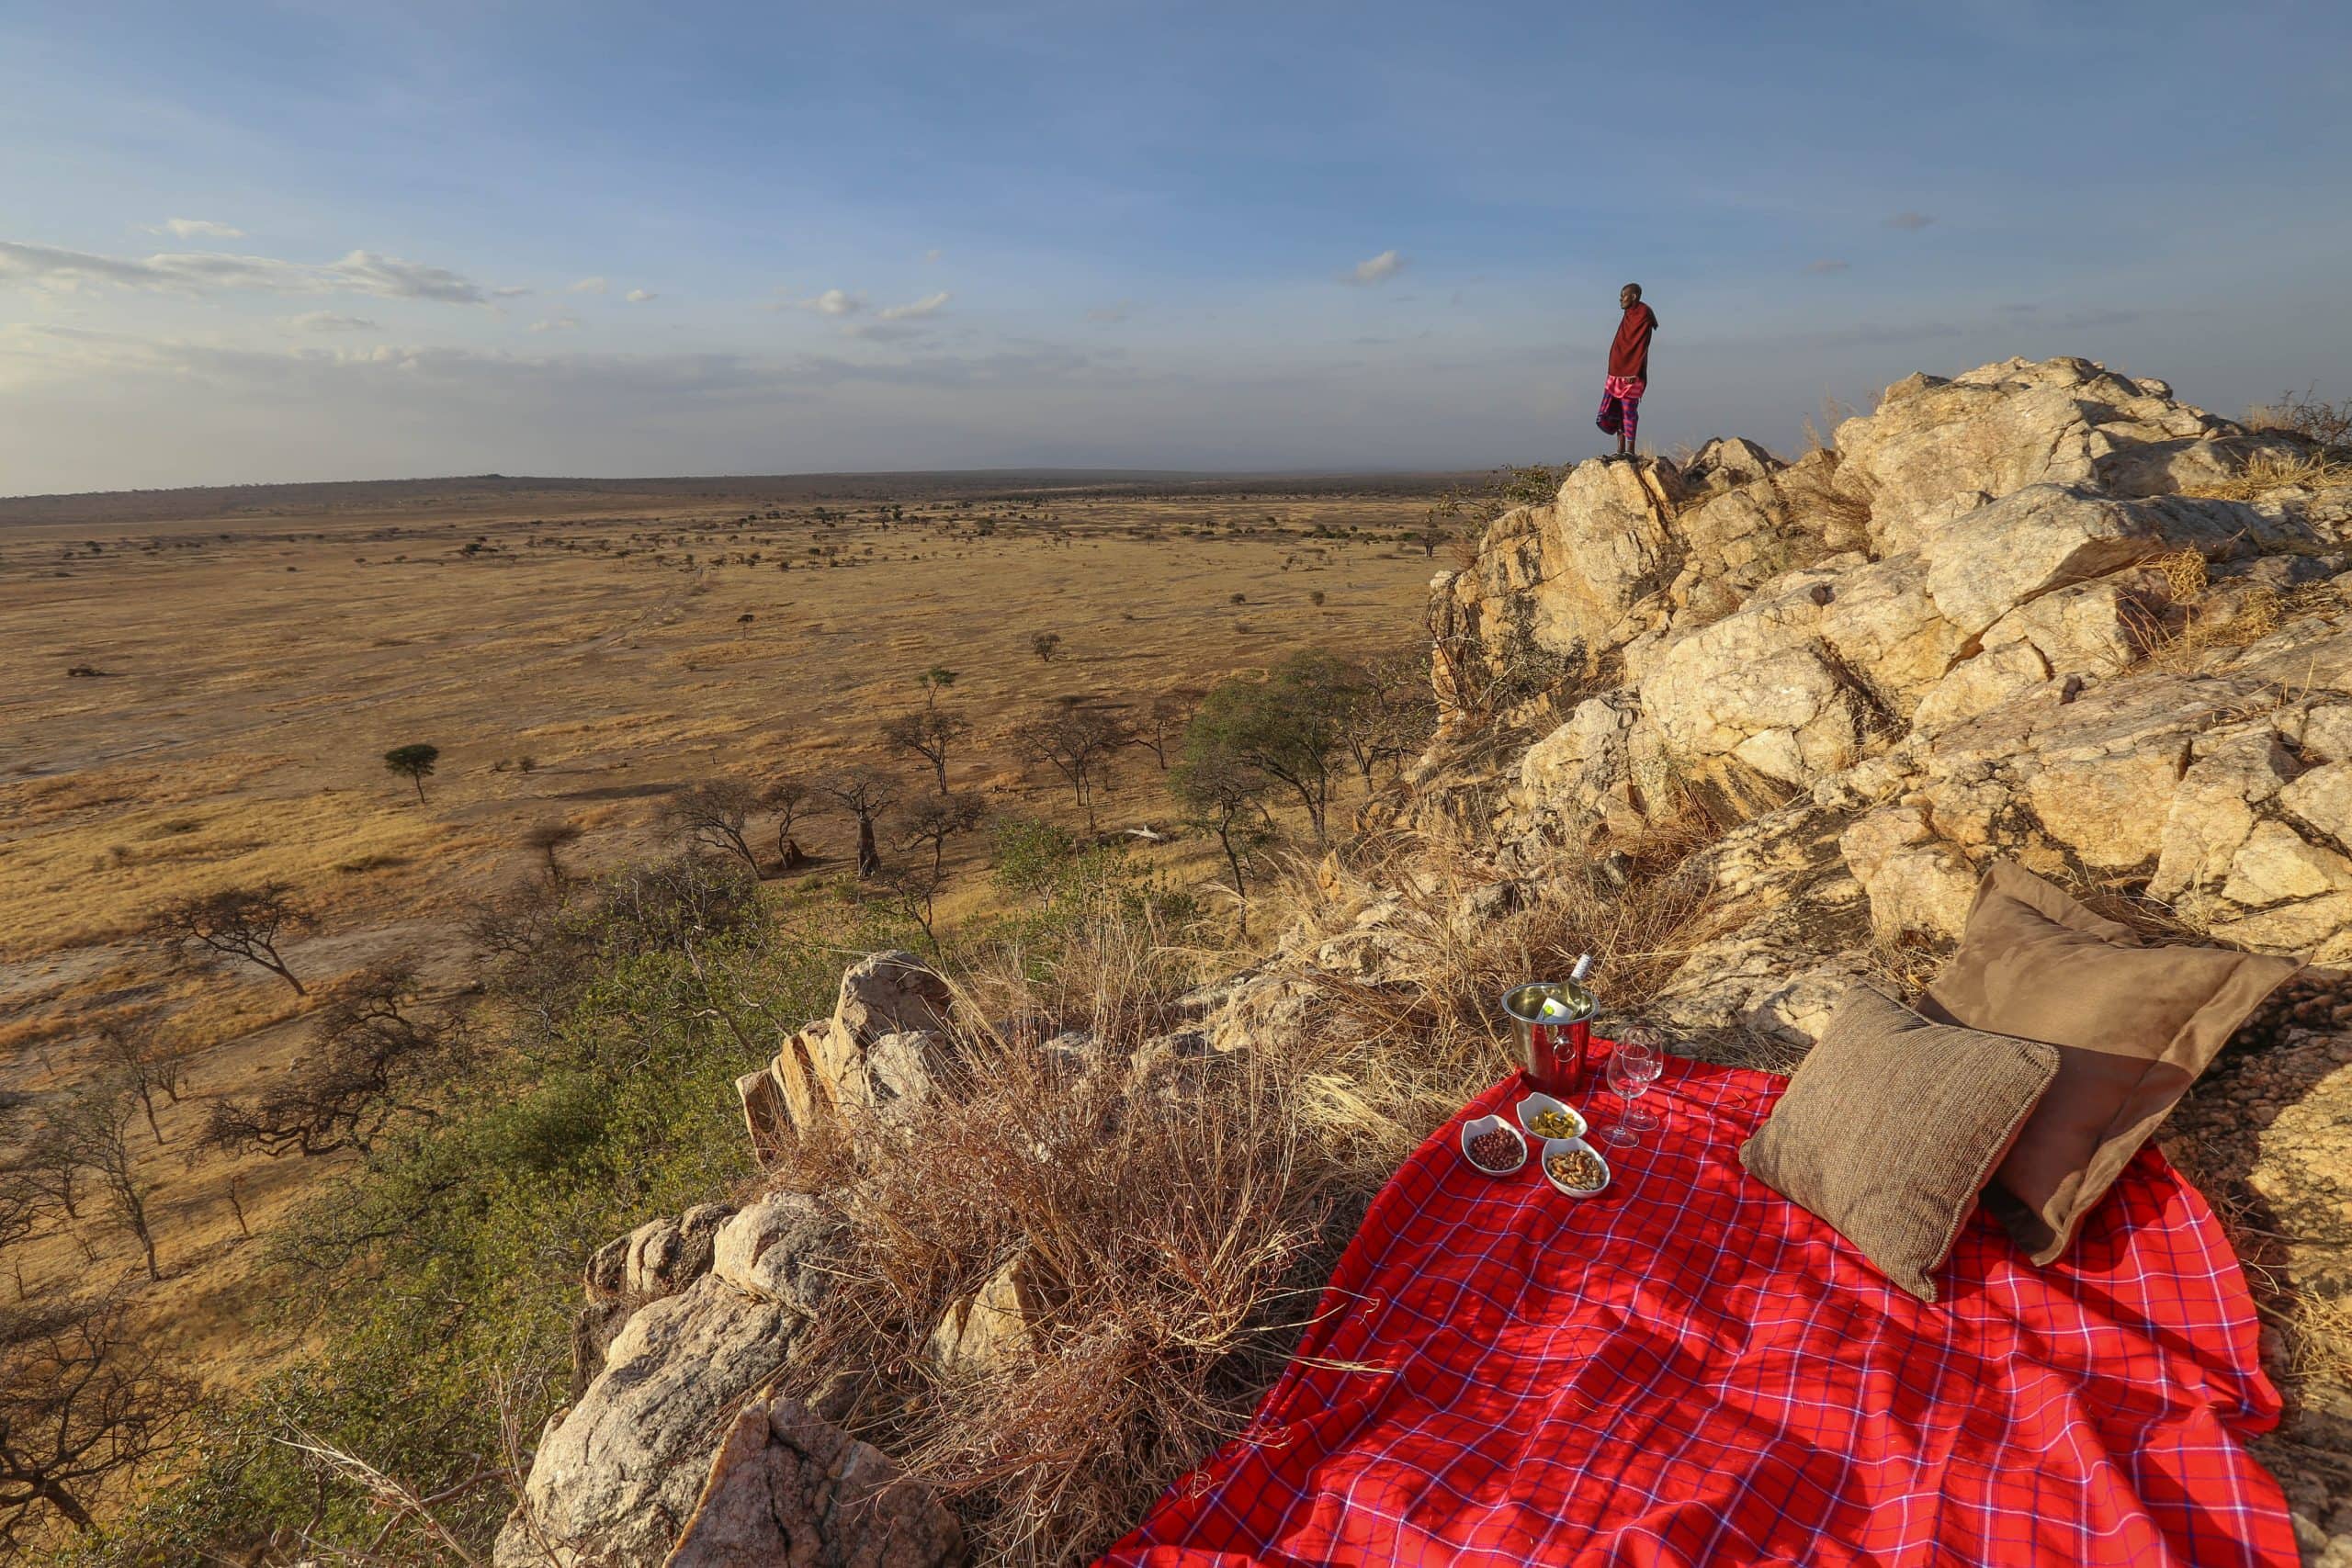 Masai standing on a ridge